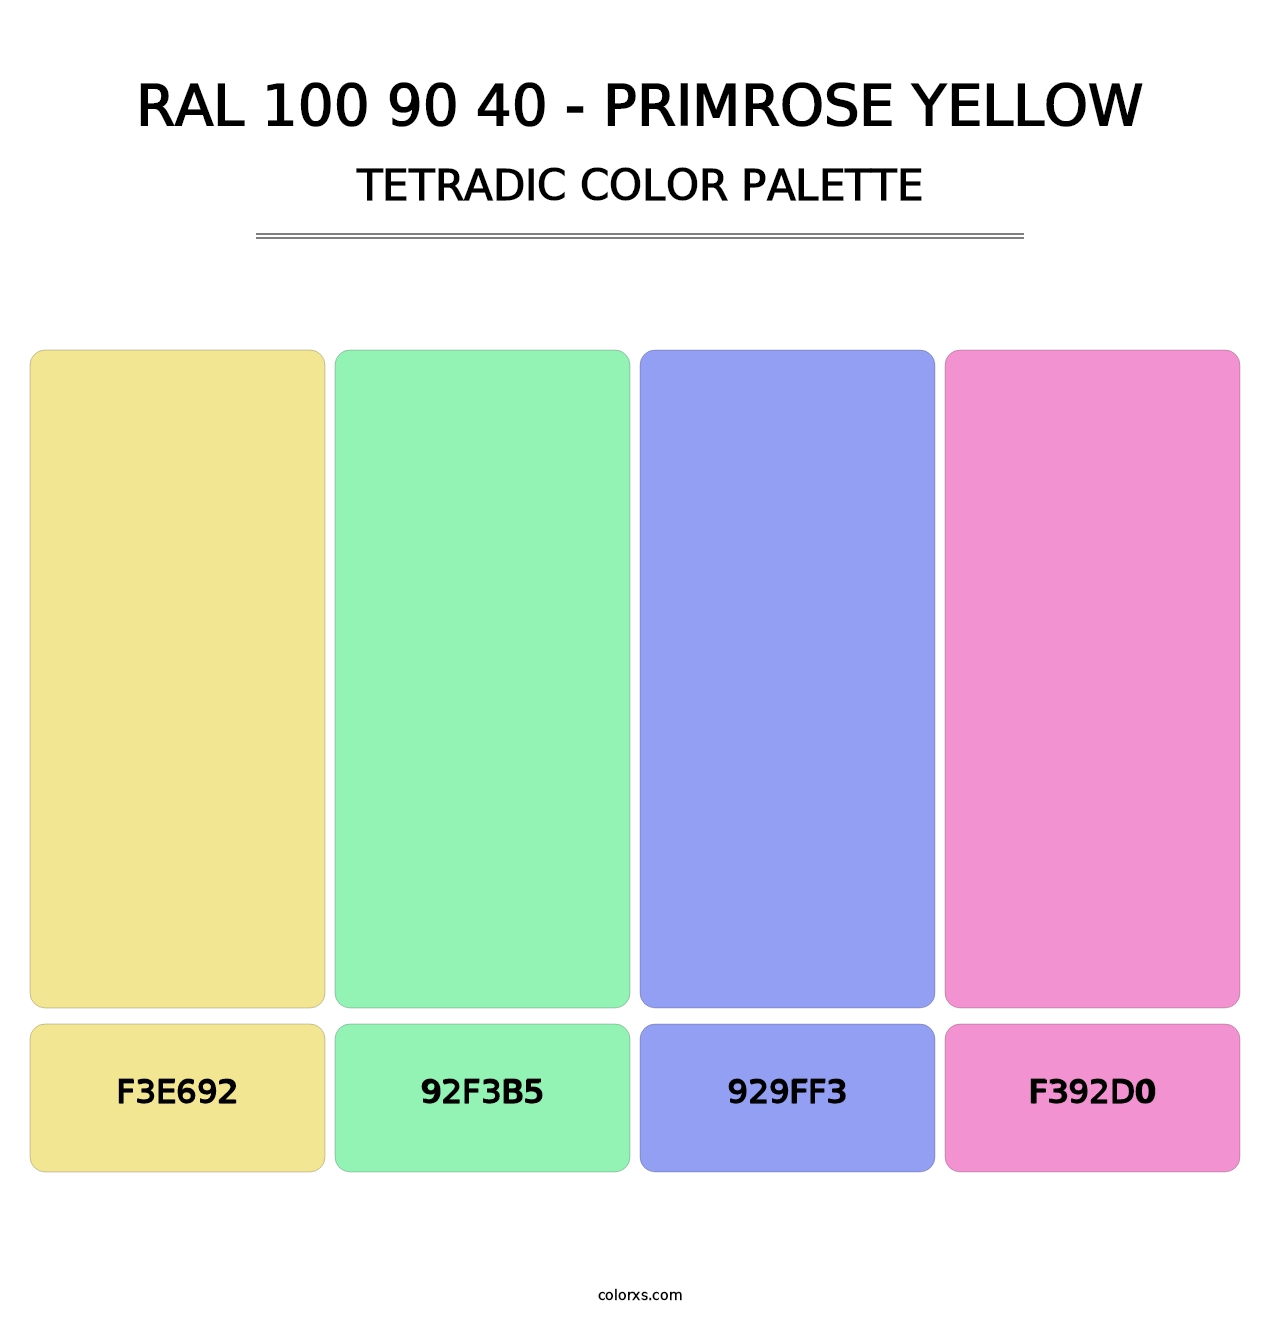 RAL 100 90 40 - Primrose Yellow - Tetradic Color Palette